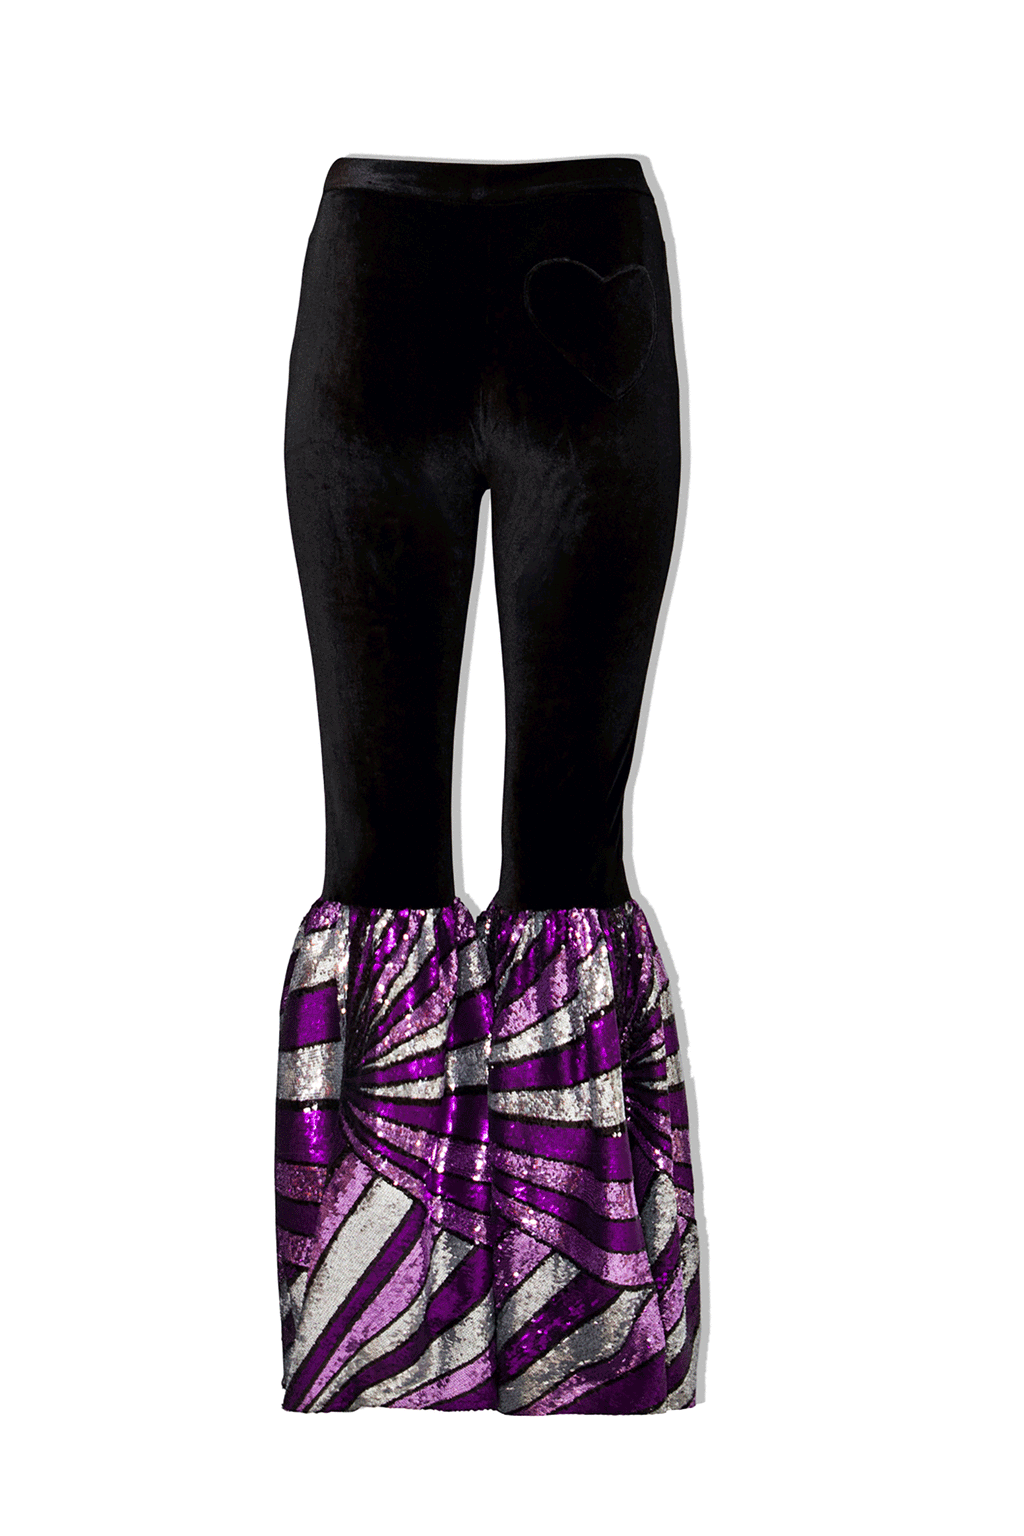 Ilona Rich Black Velvet Purple Sequin Flared Trousers